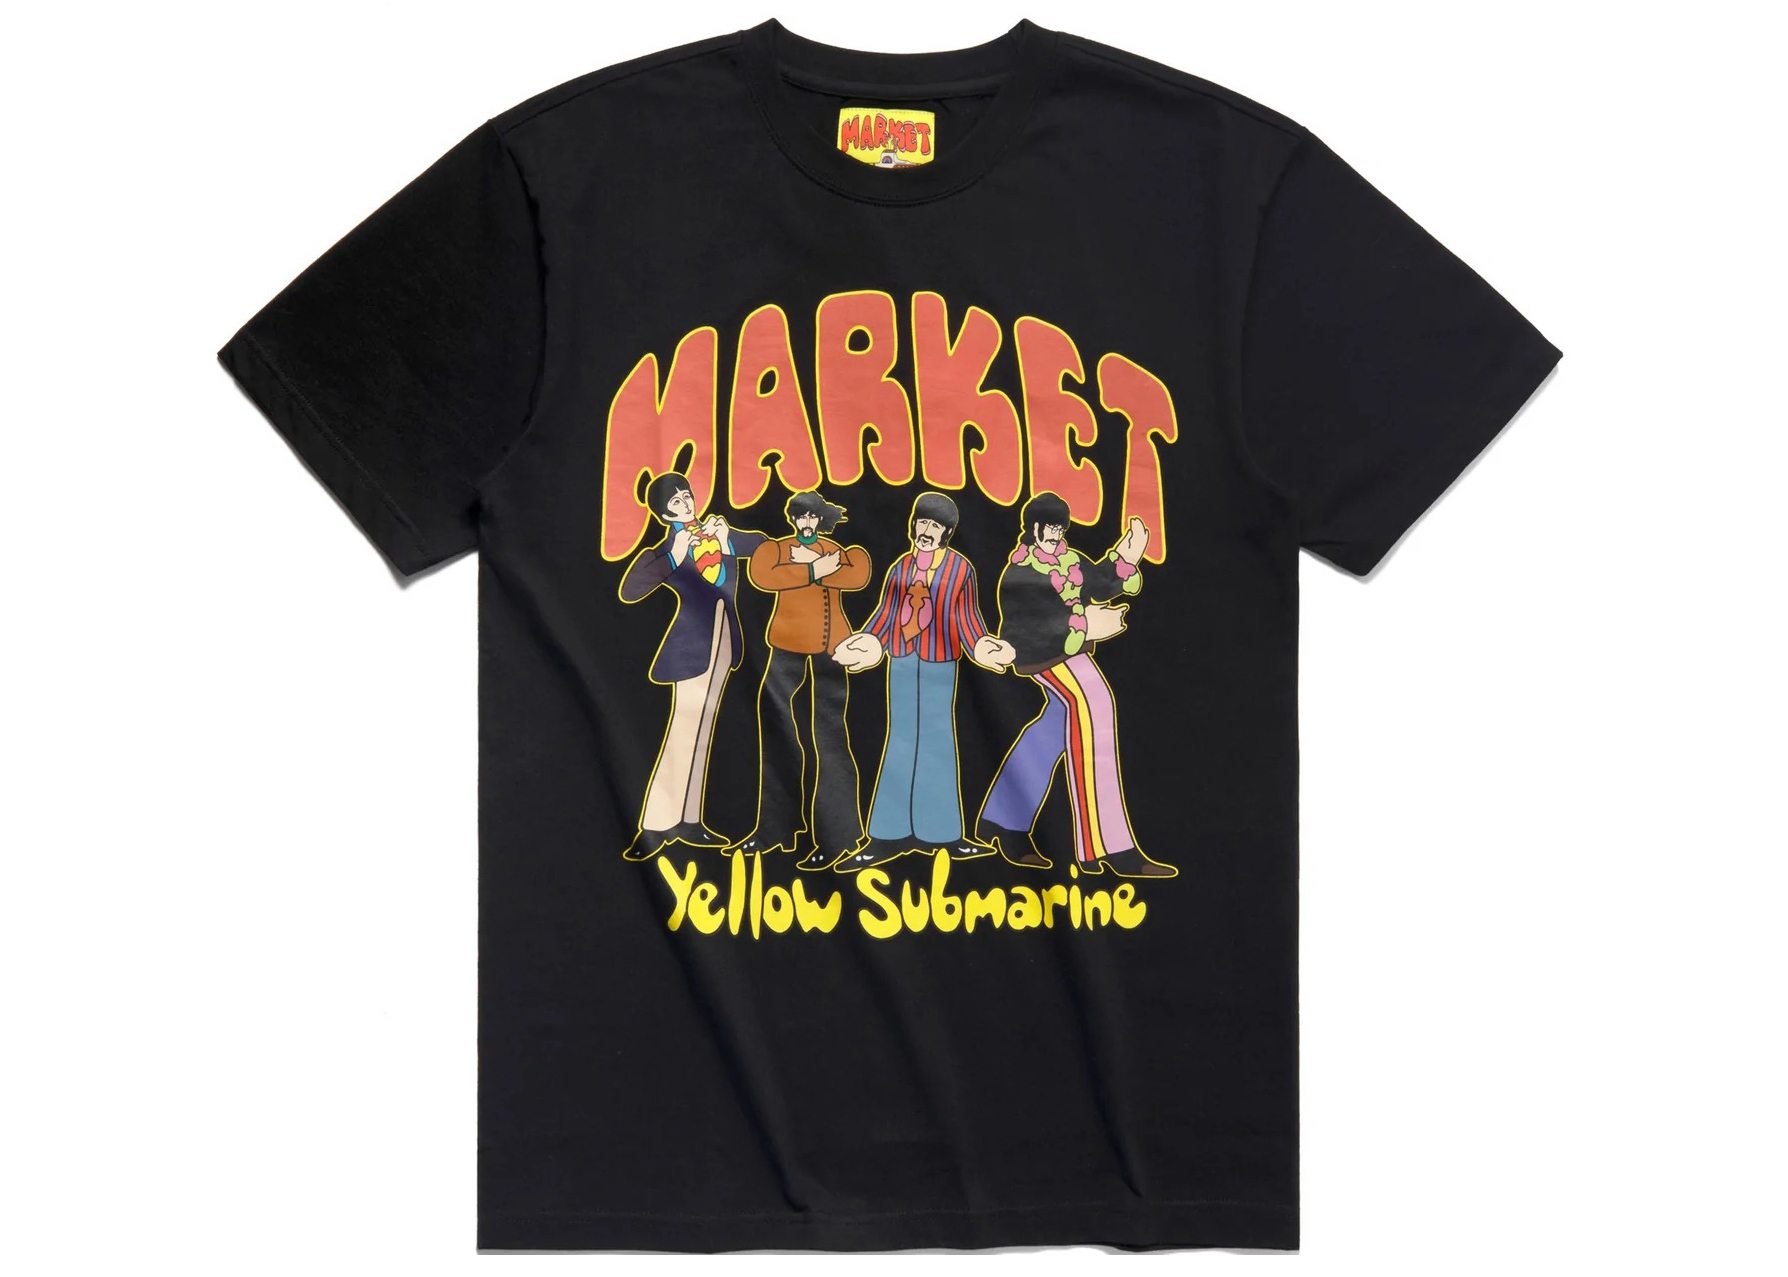 Market x Beatles Yellow Submarine Pose T-Shirt Black Men's - FW22 - US